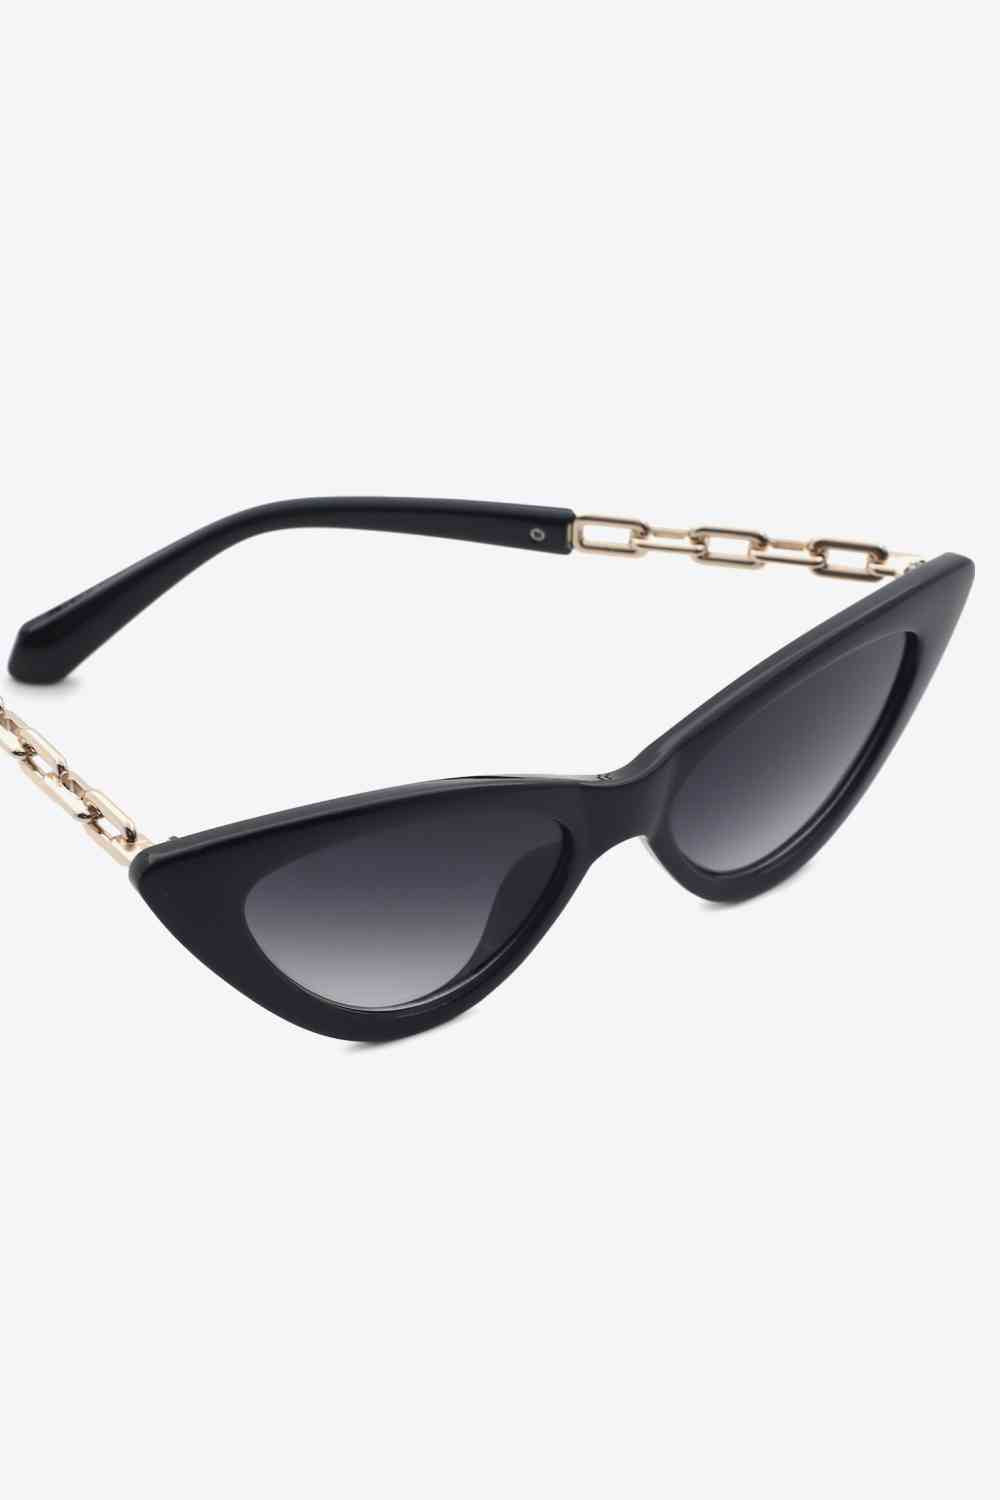 TEEK - Size Chain Cat-Eye Sunglasses EYEGLASSES TEEK Trend   